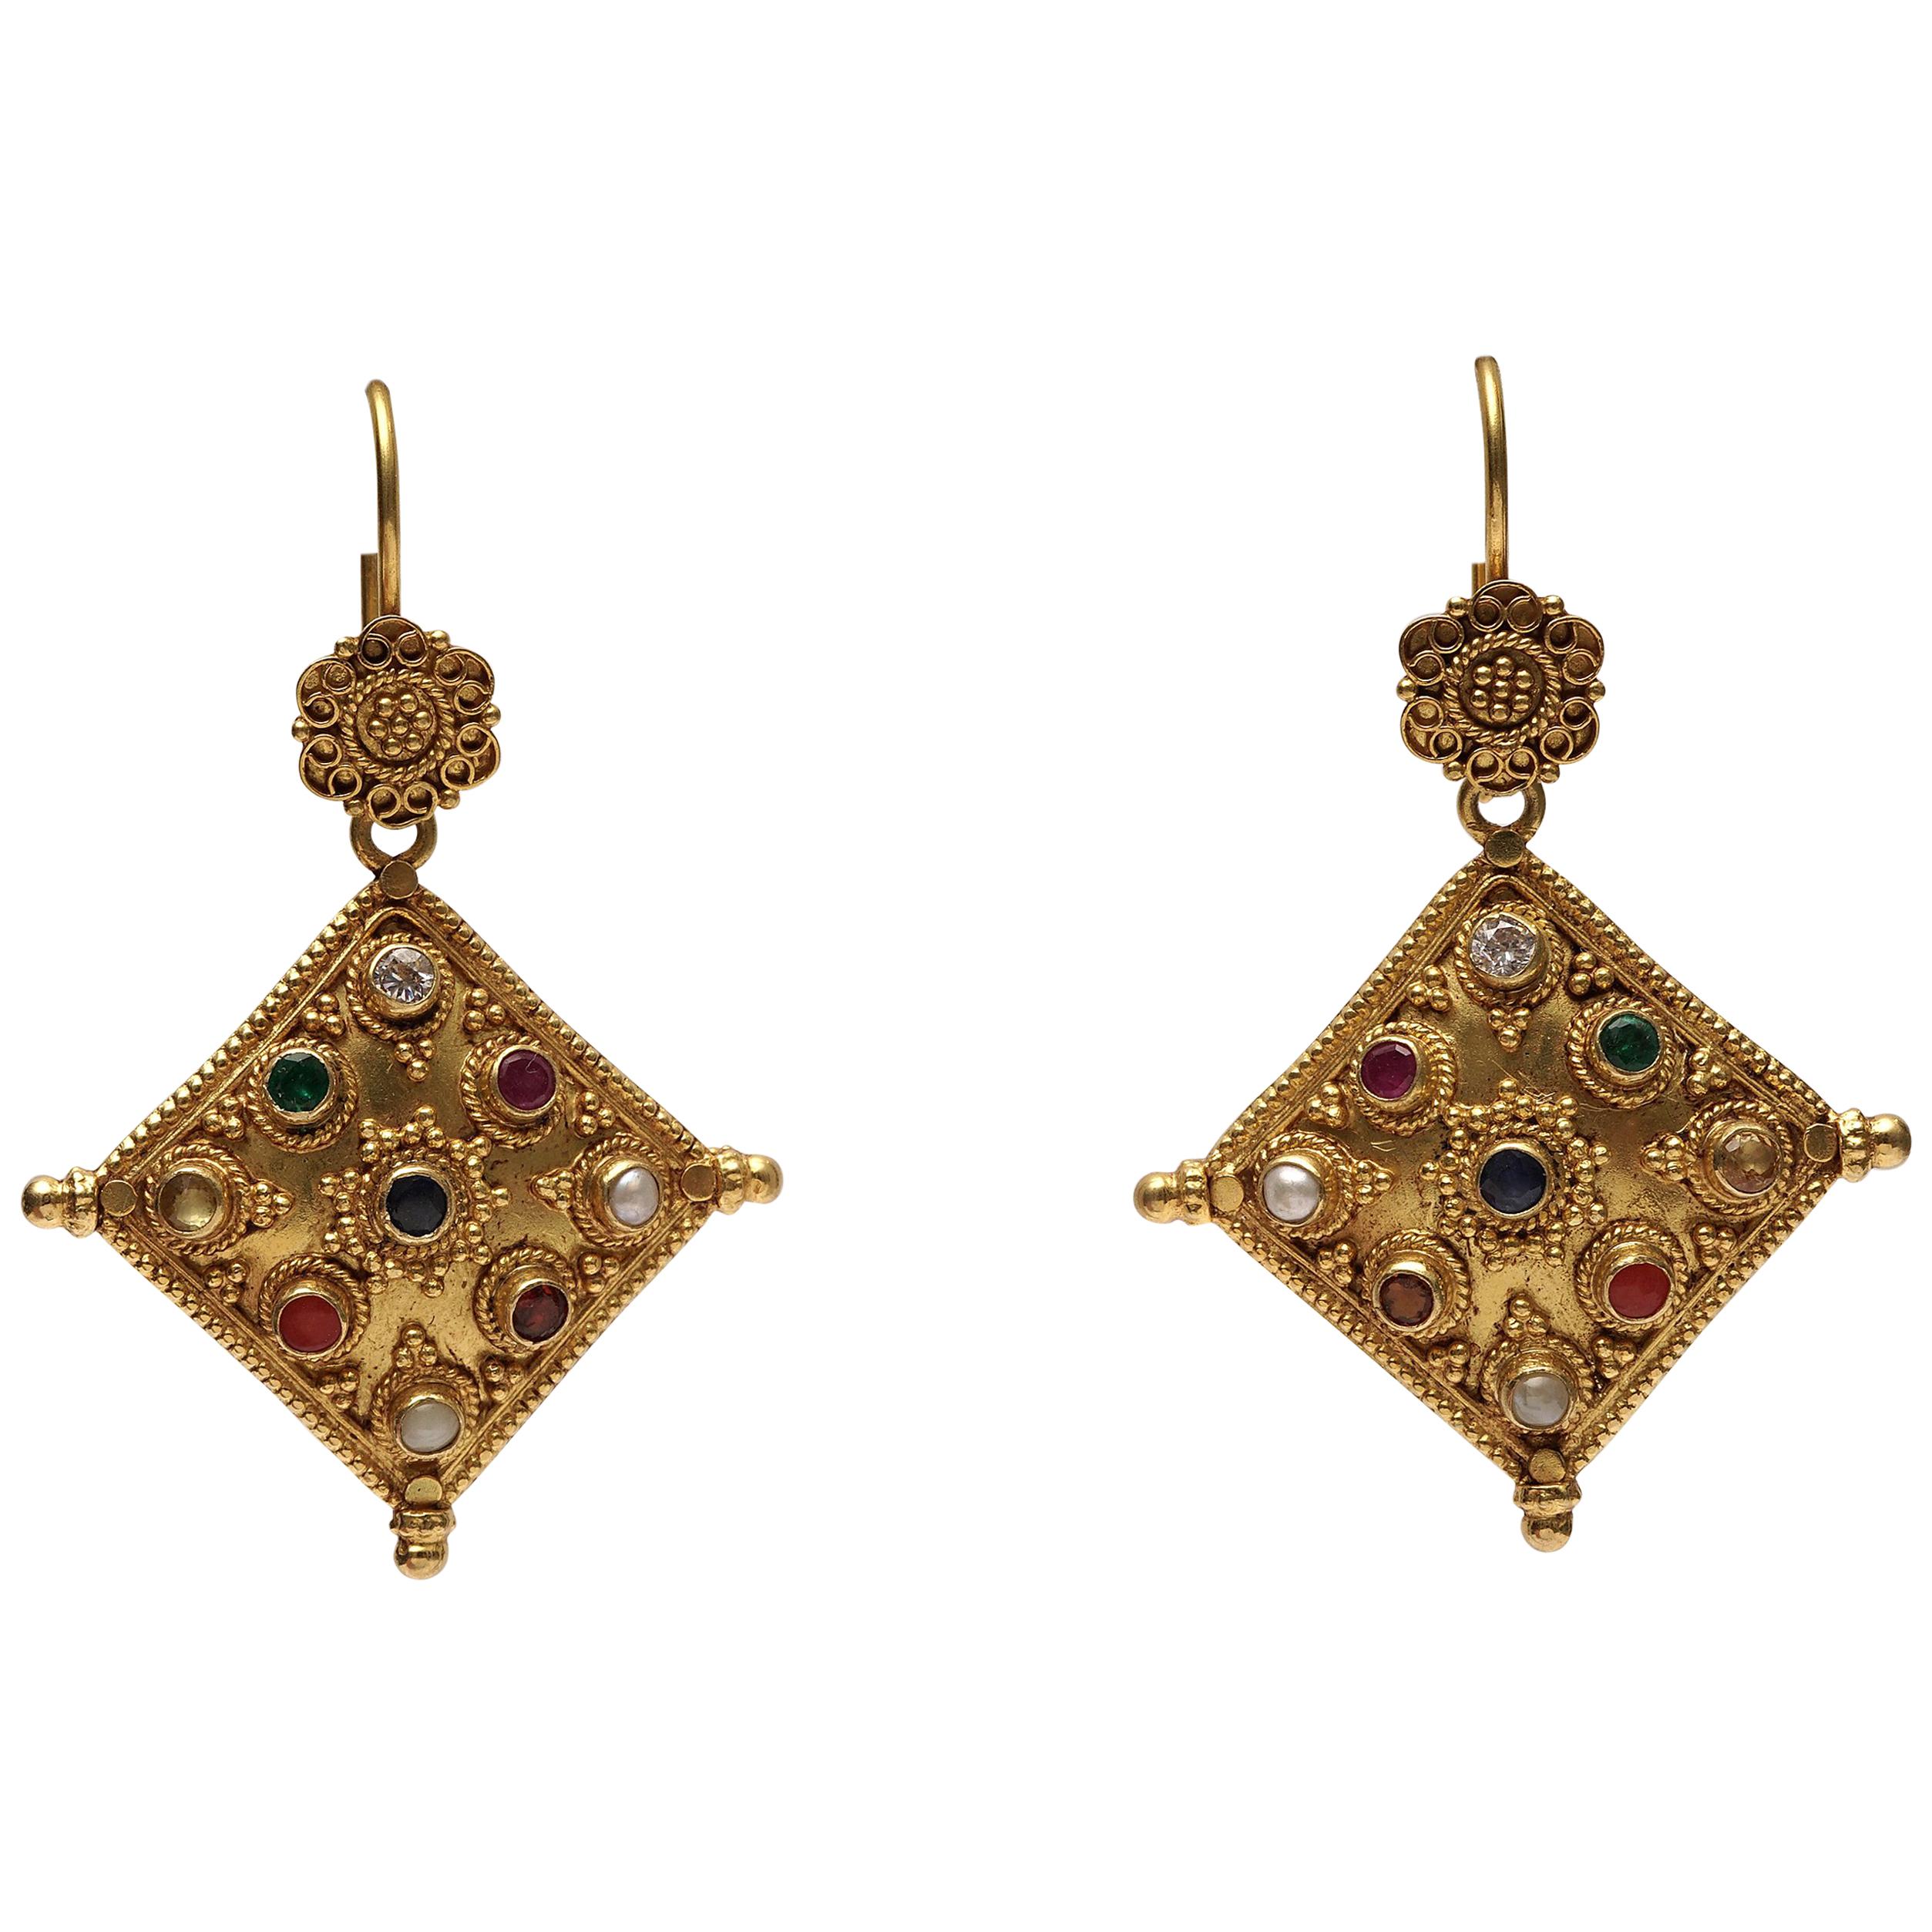 18 Karat Gold Nava Ratna Drop Earrings with Precious Stones, India